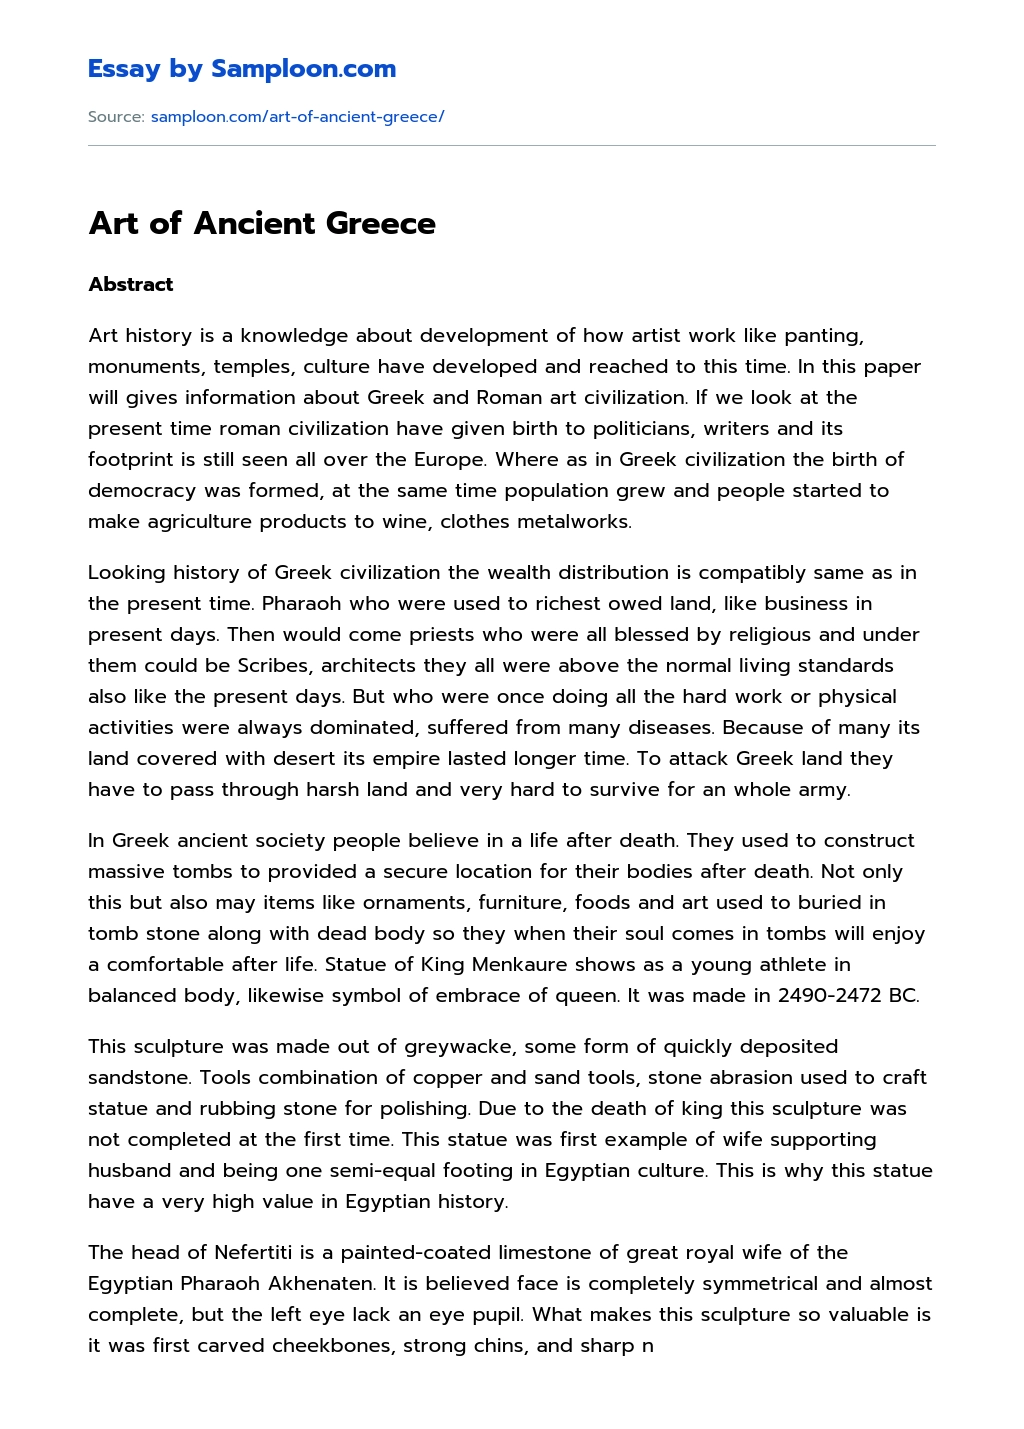 Art of Ancient Greece essay